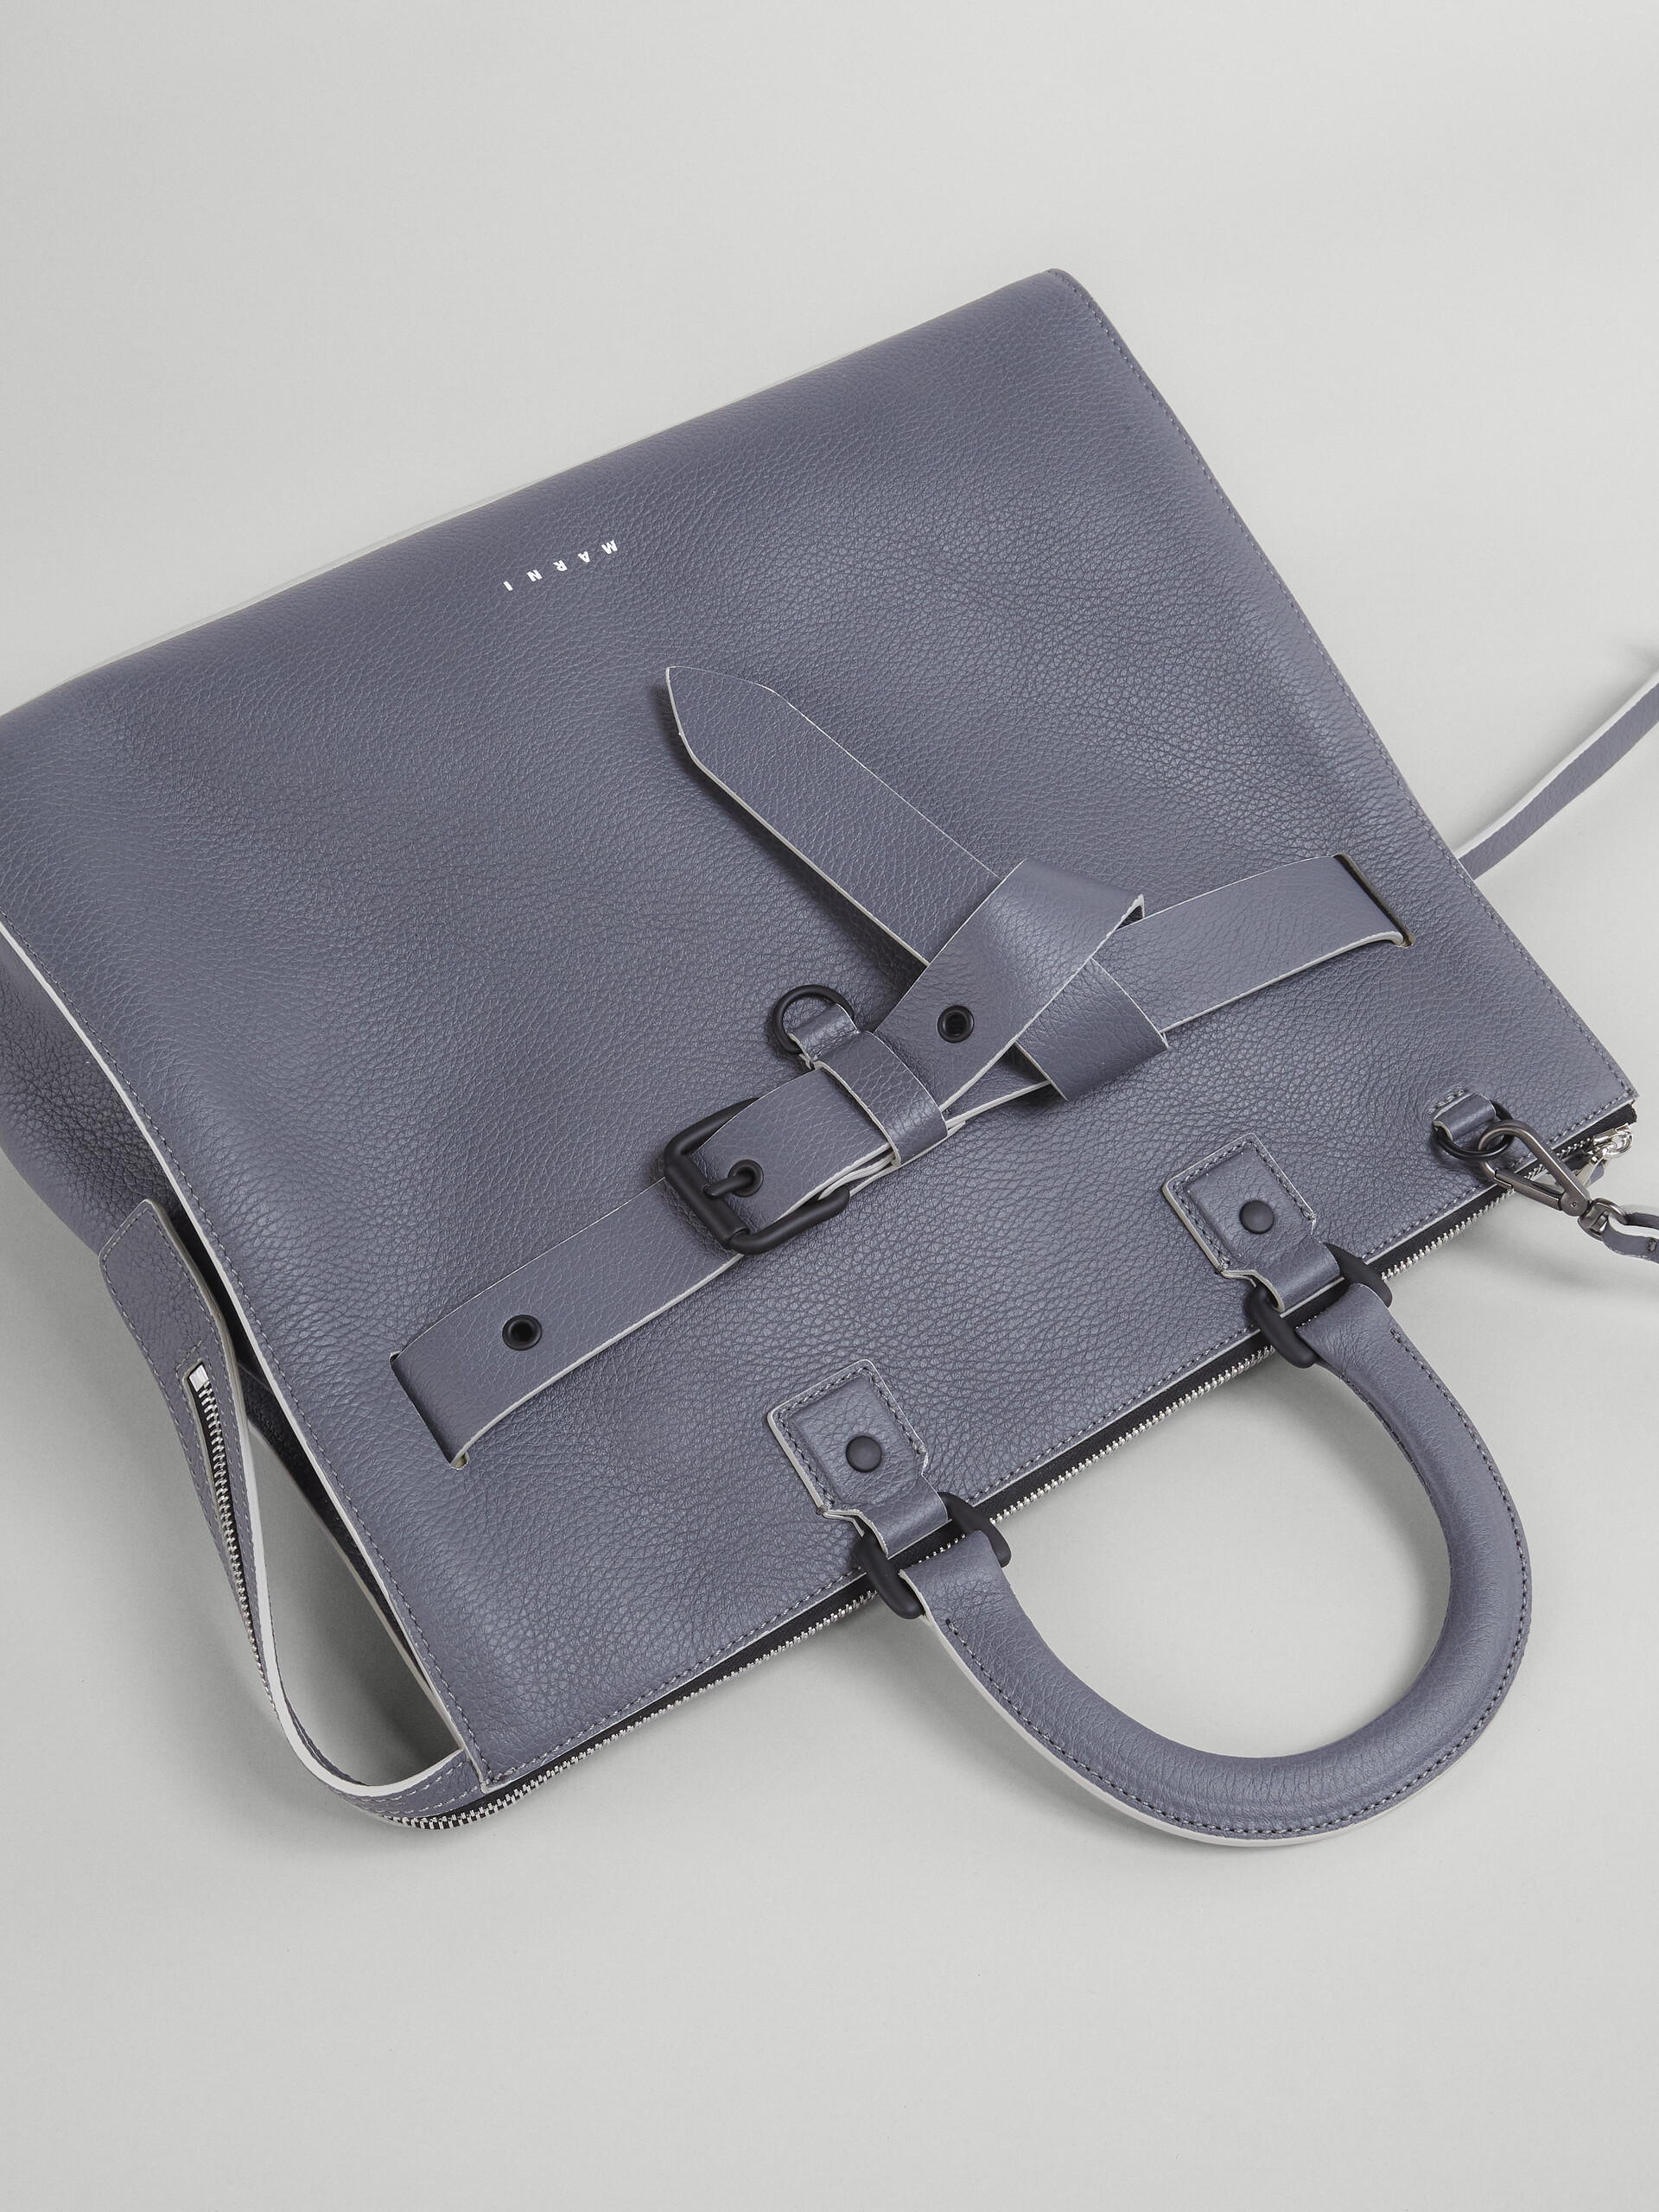 TREASURE bag in grey leather - Handbags - Image 4